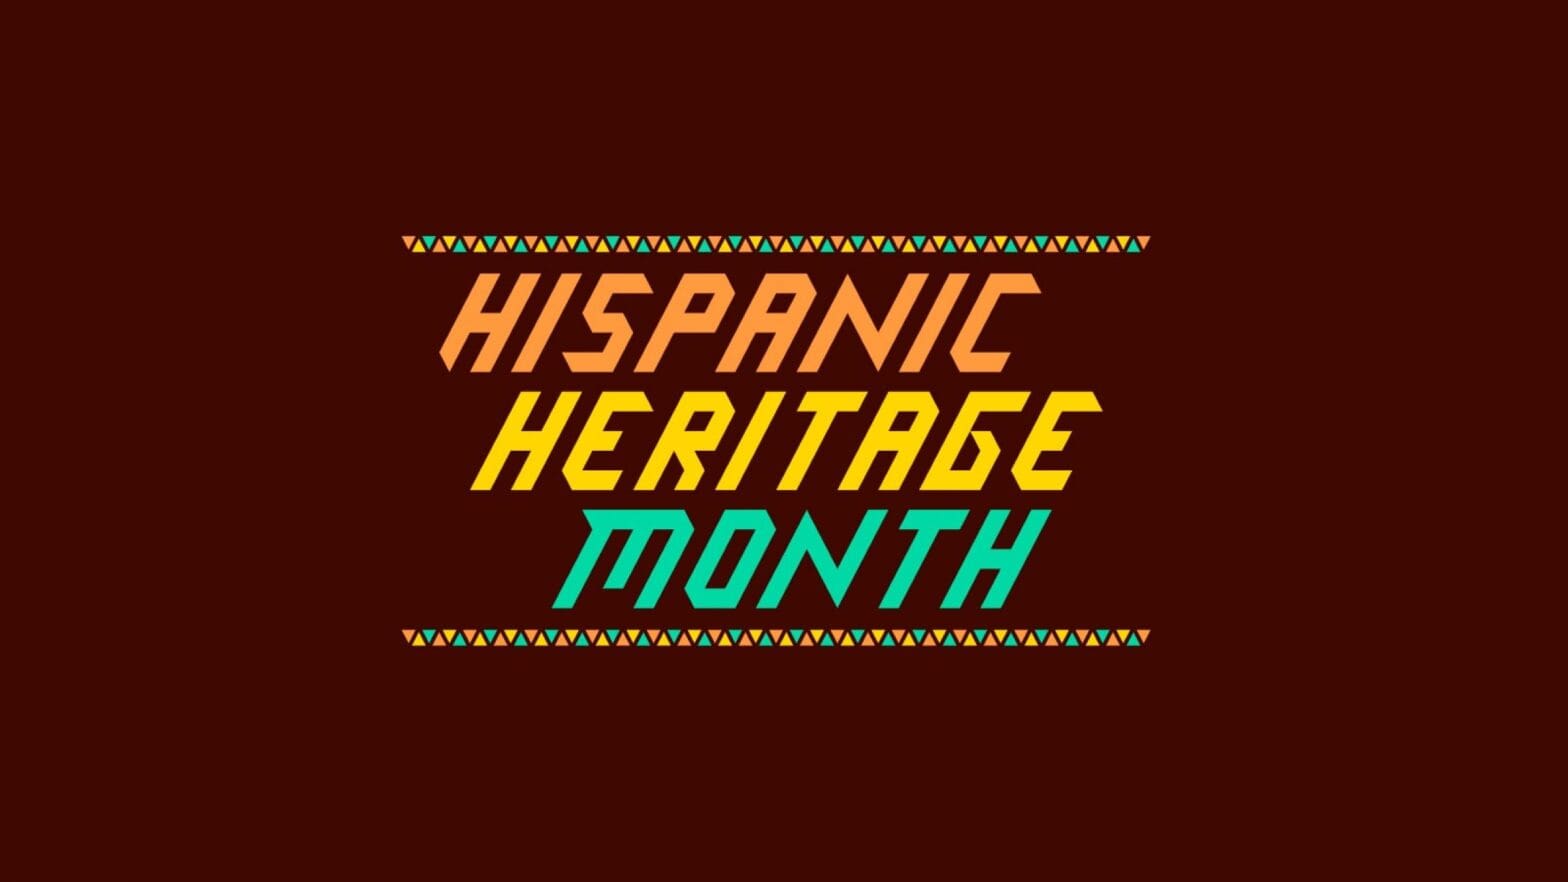 Hispanic Heritage Month celebration poster